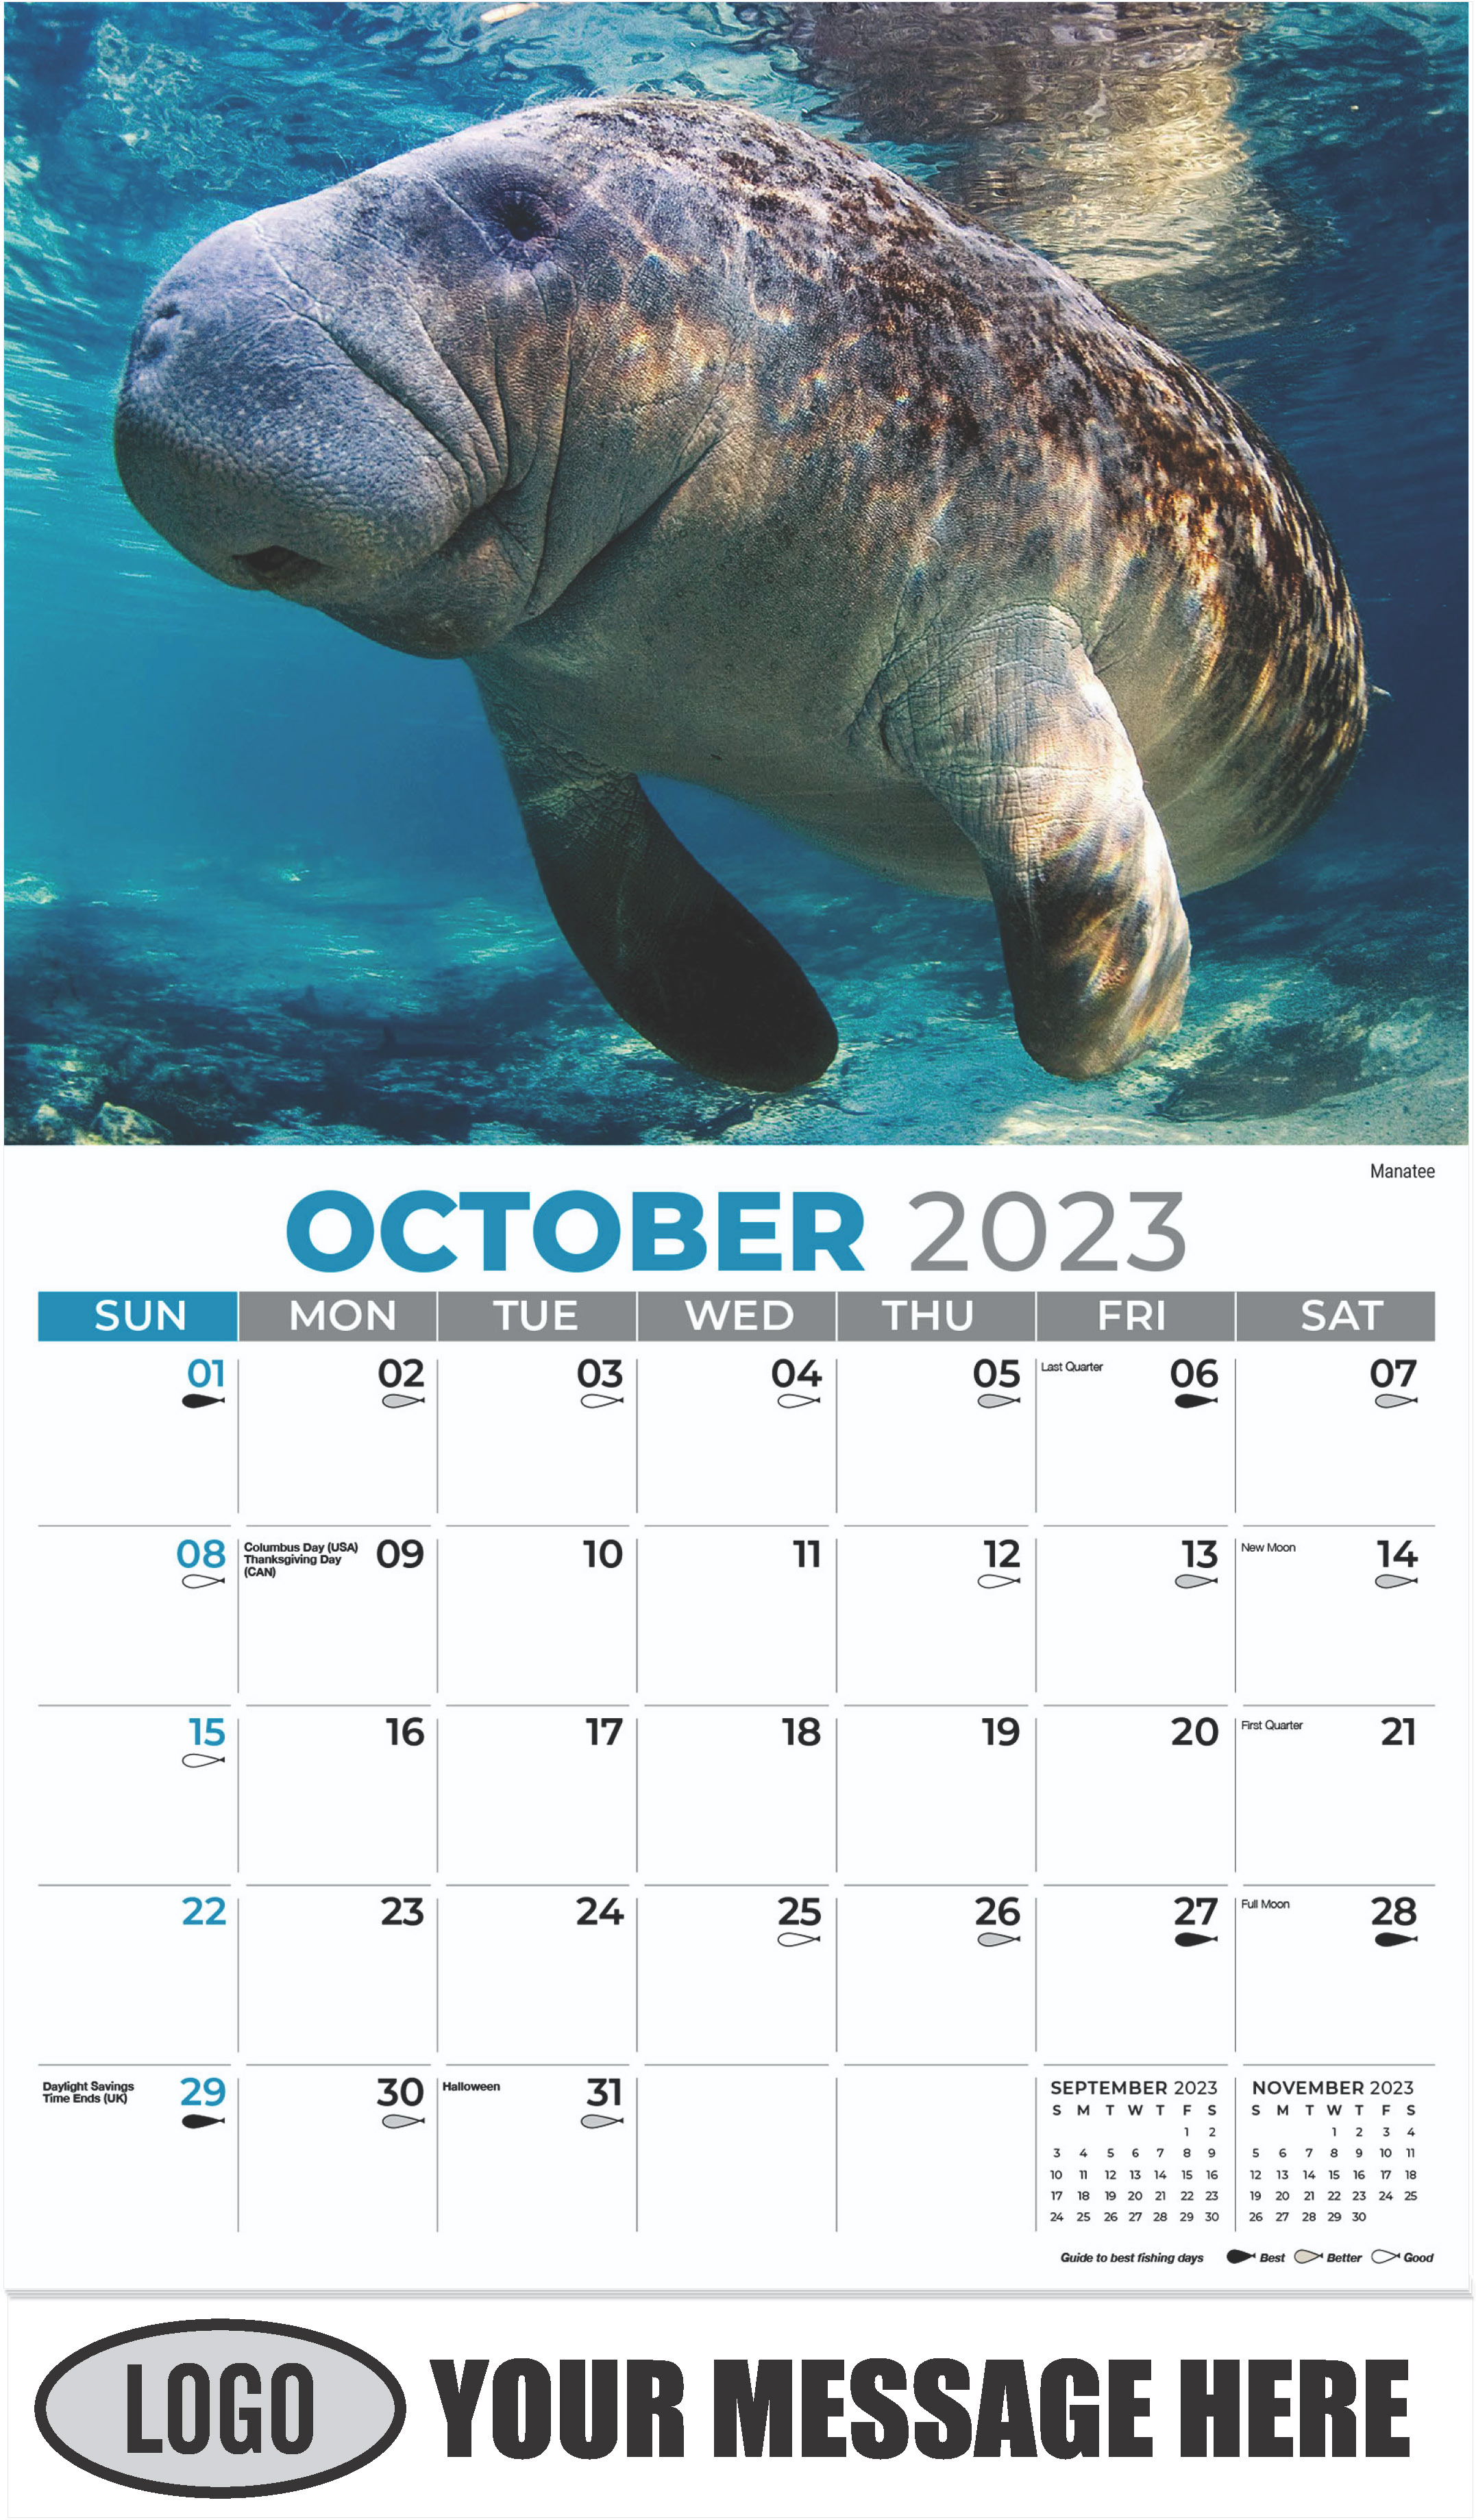 Manatee - October - North American Wildlife 2023 Promotional Calendar